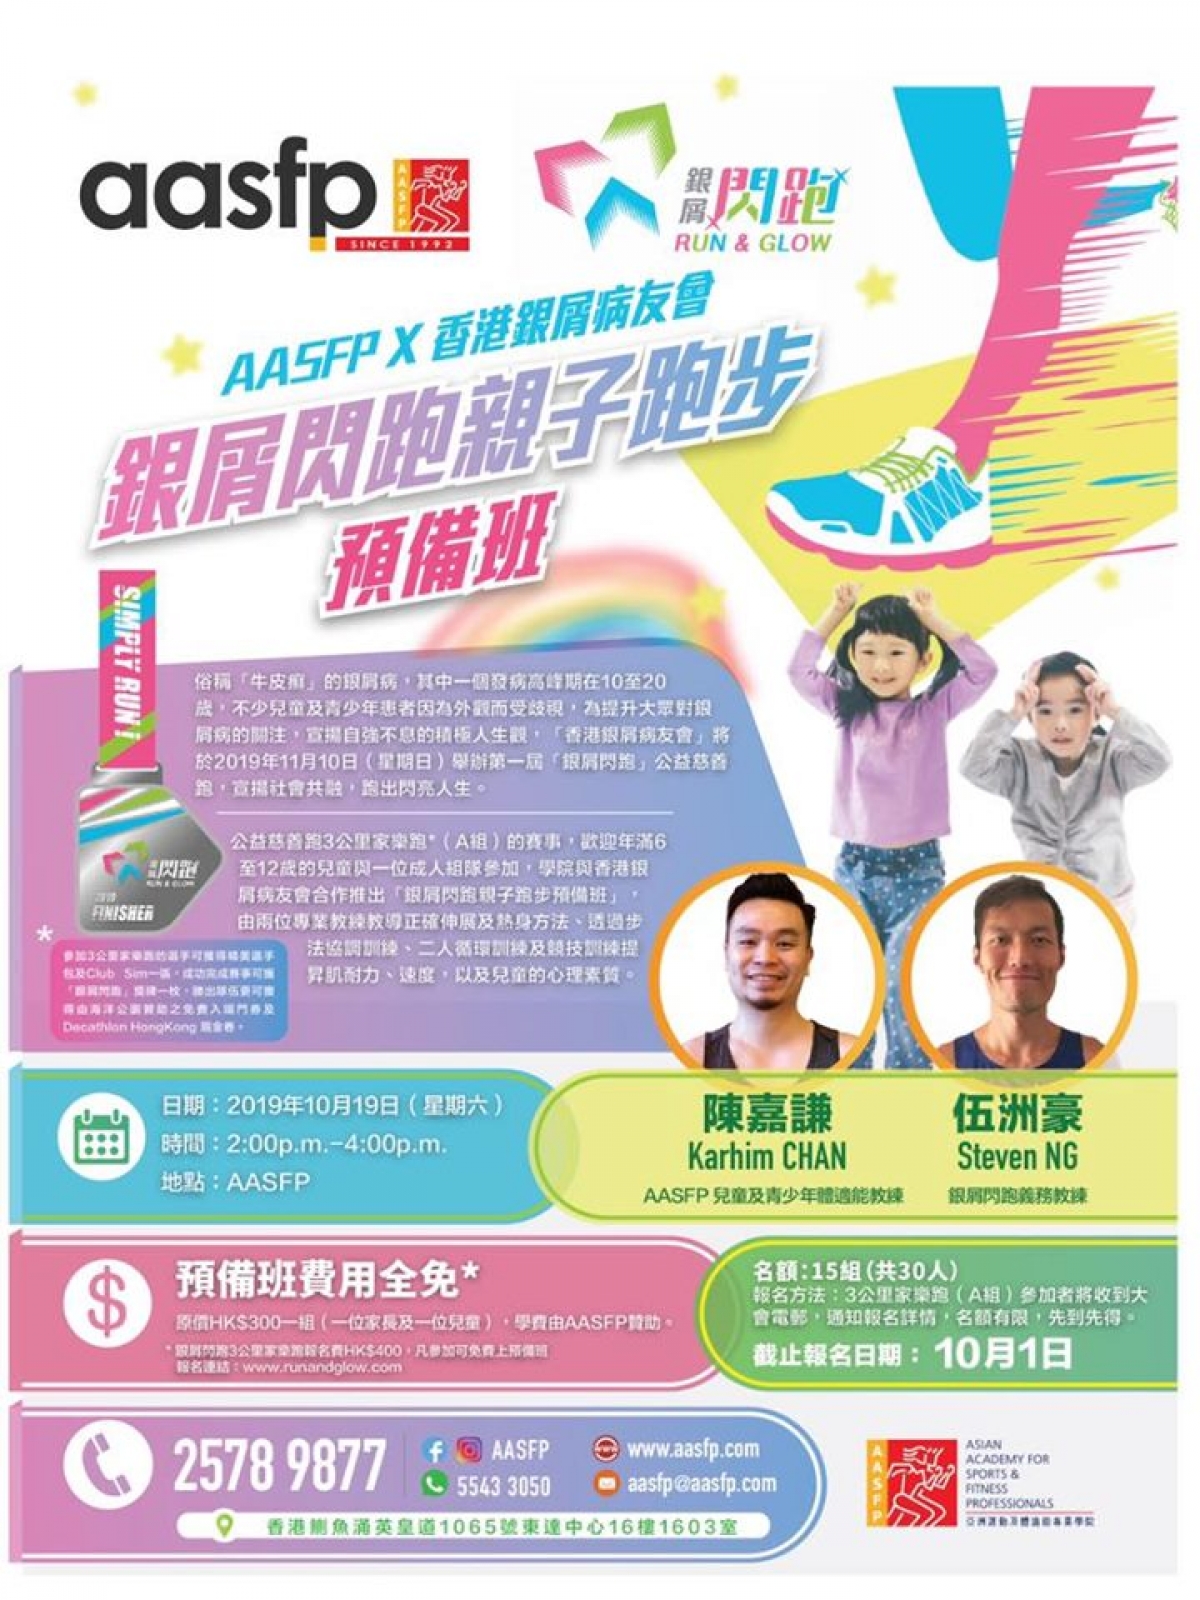 AASFP X 香港銀屑病友會「銀屑閃跑親子跑步預備班」